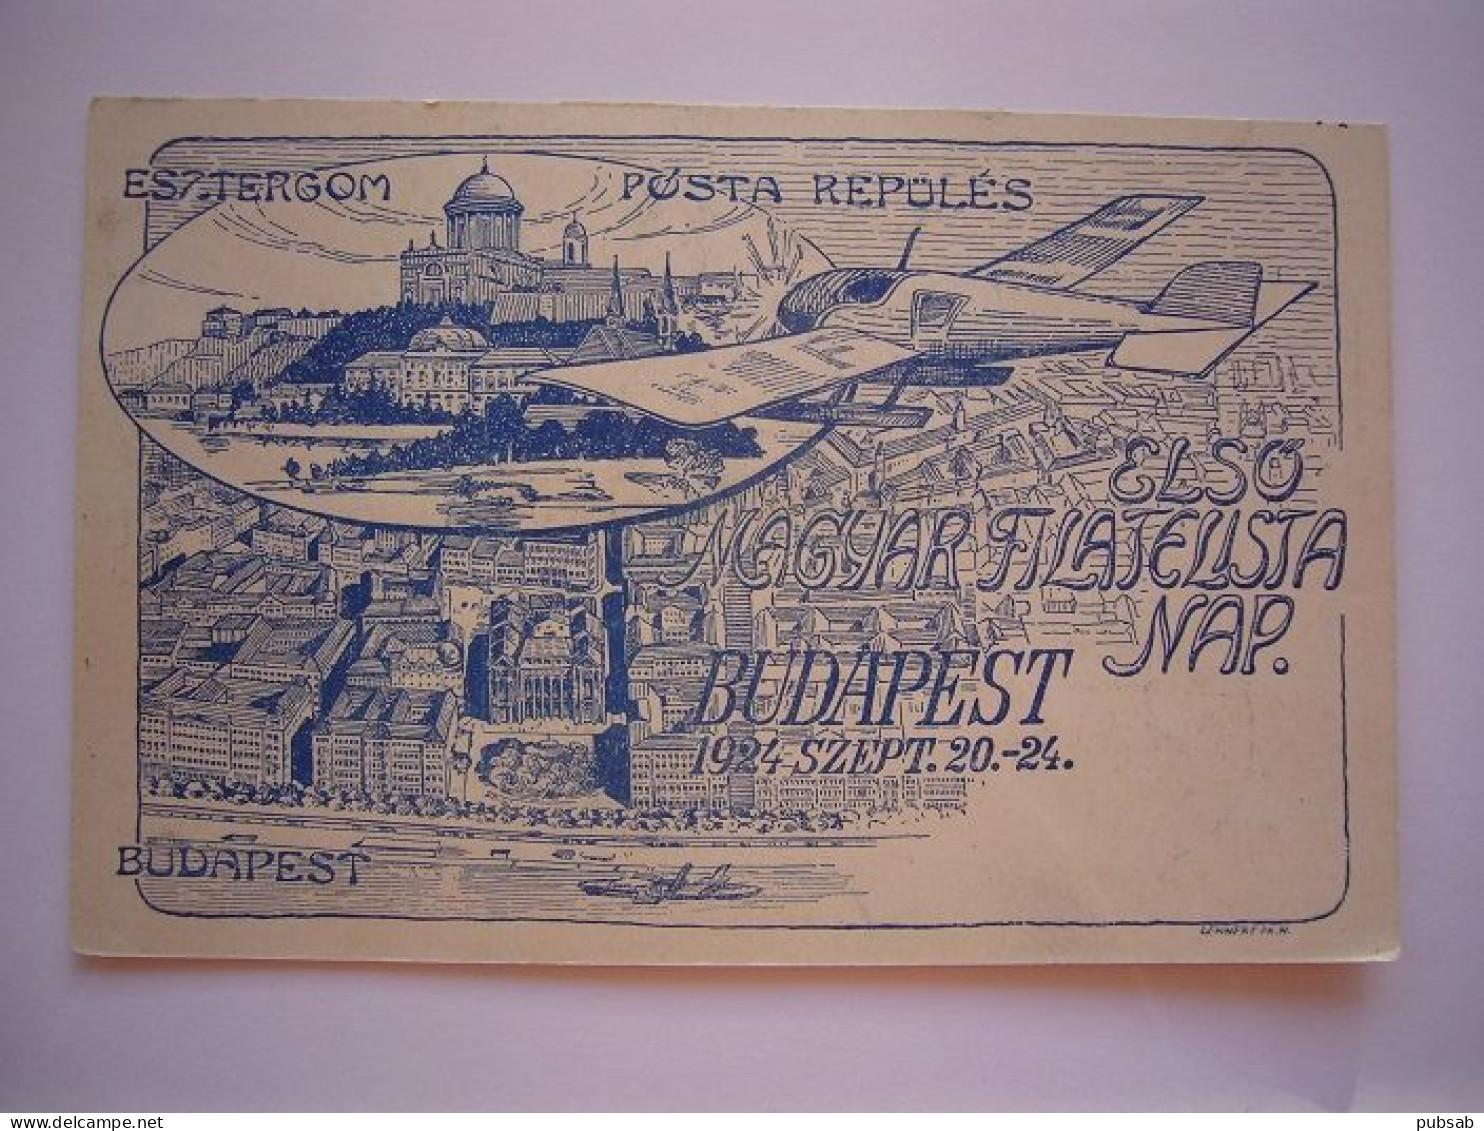 Avion / Airplane / ES7. TERGOM / Seaplane Over Budapest / Card Posted At Budapest To Esztergom / Sep 23, 1923 - 1919-1938